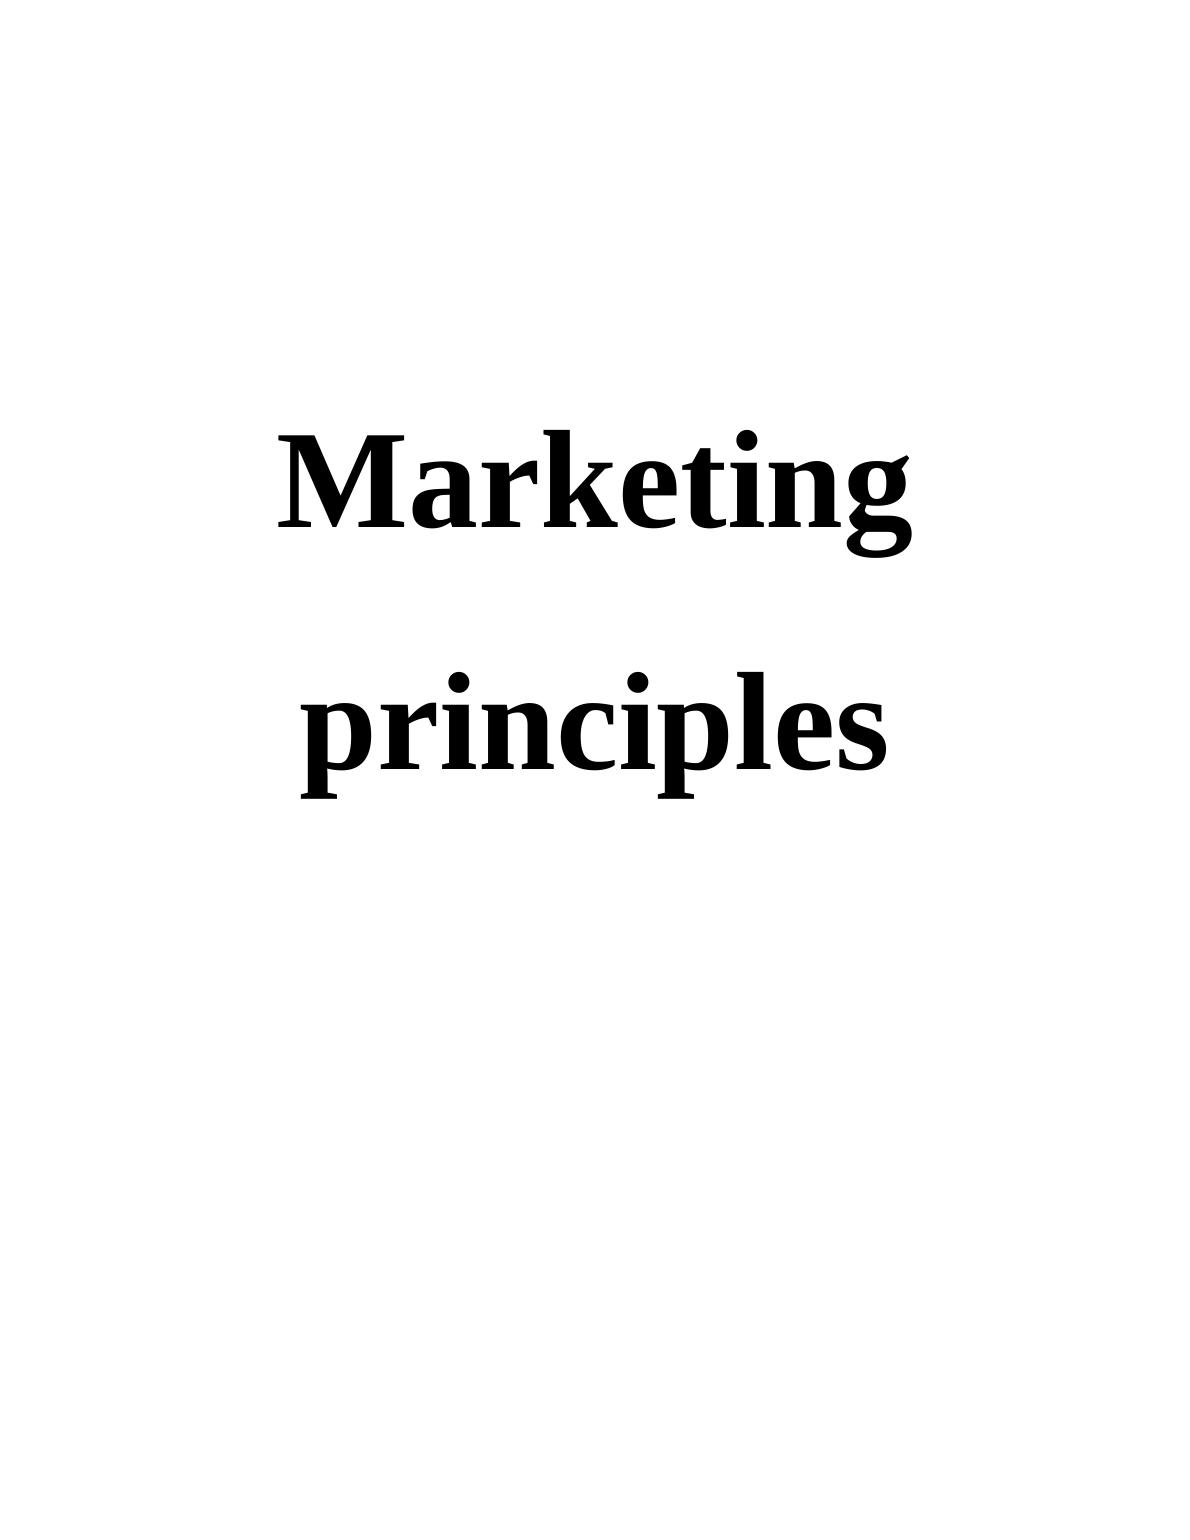 Report on Marketing Principles | Perfetto_1